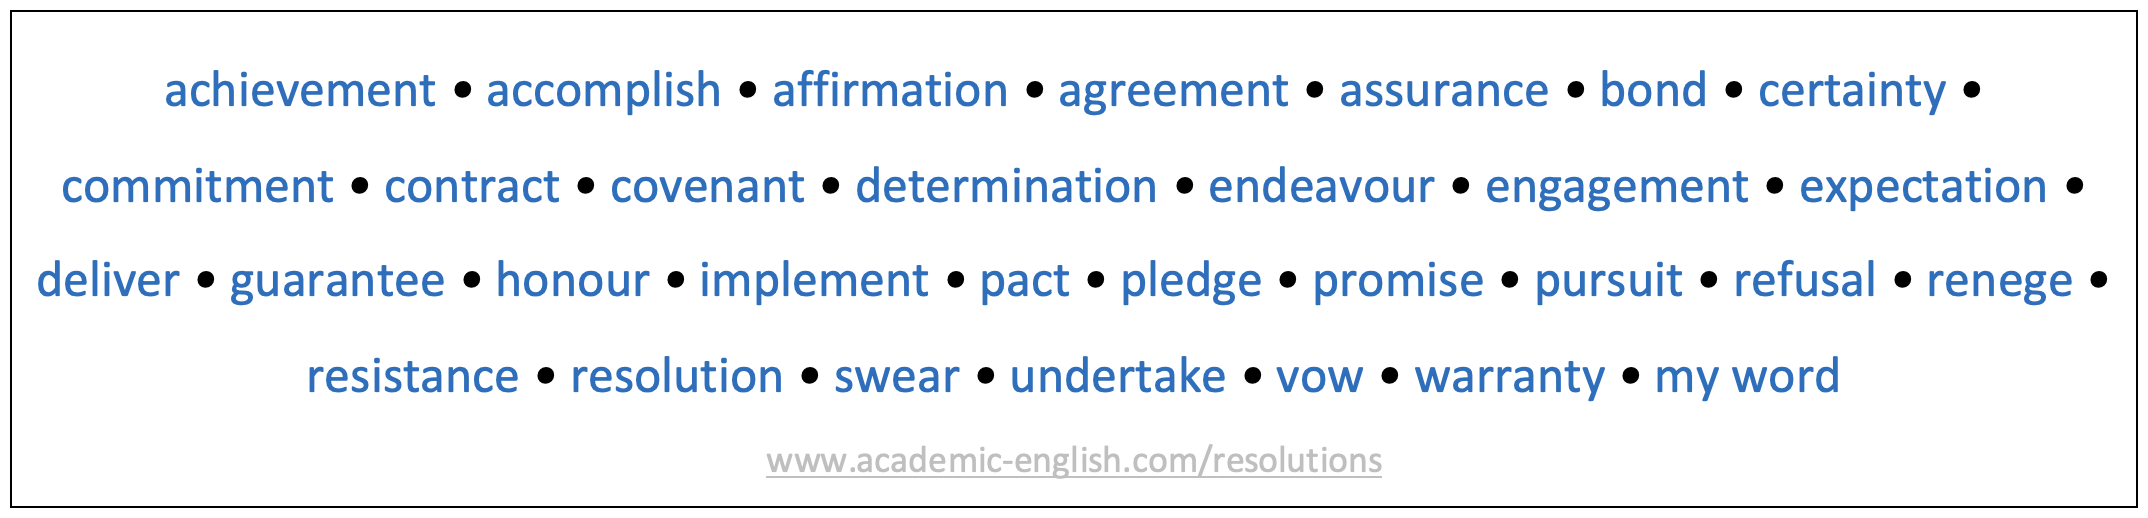 Resolution associated language